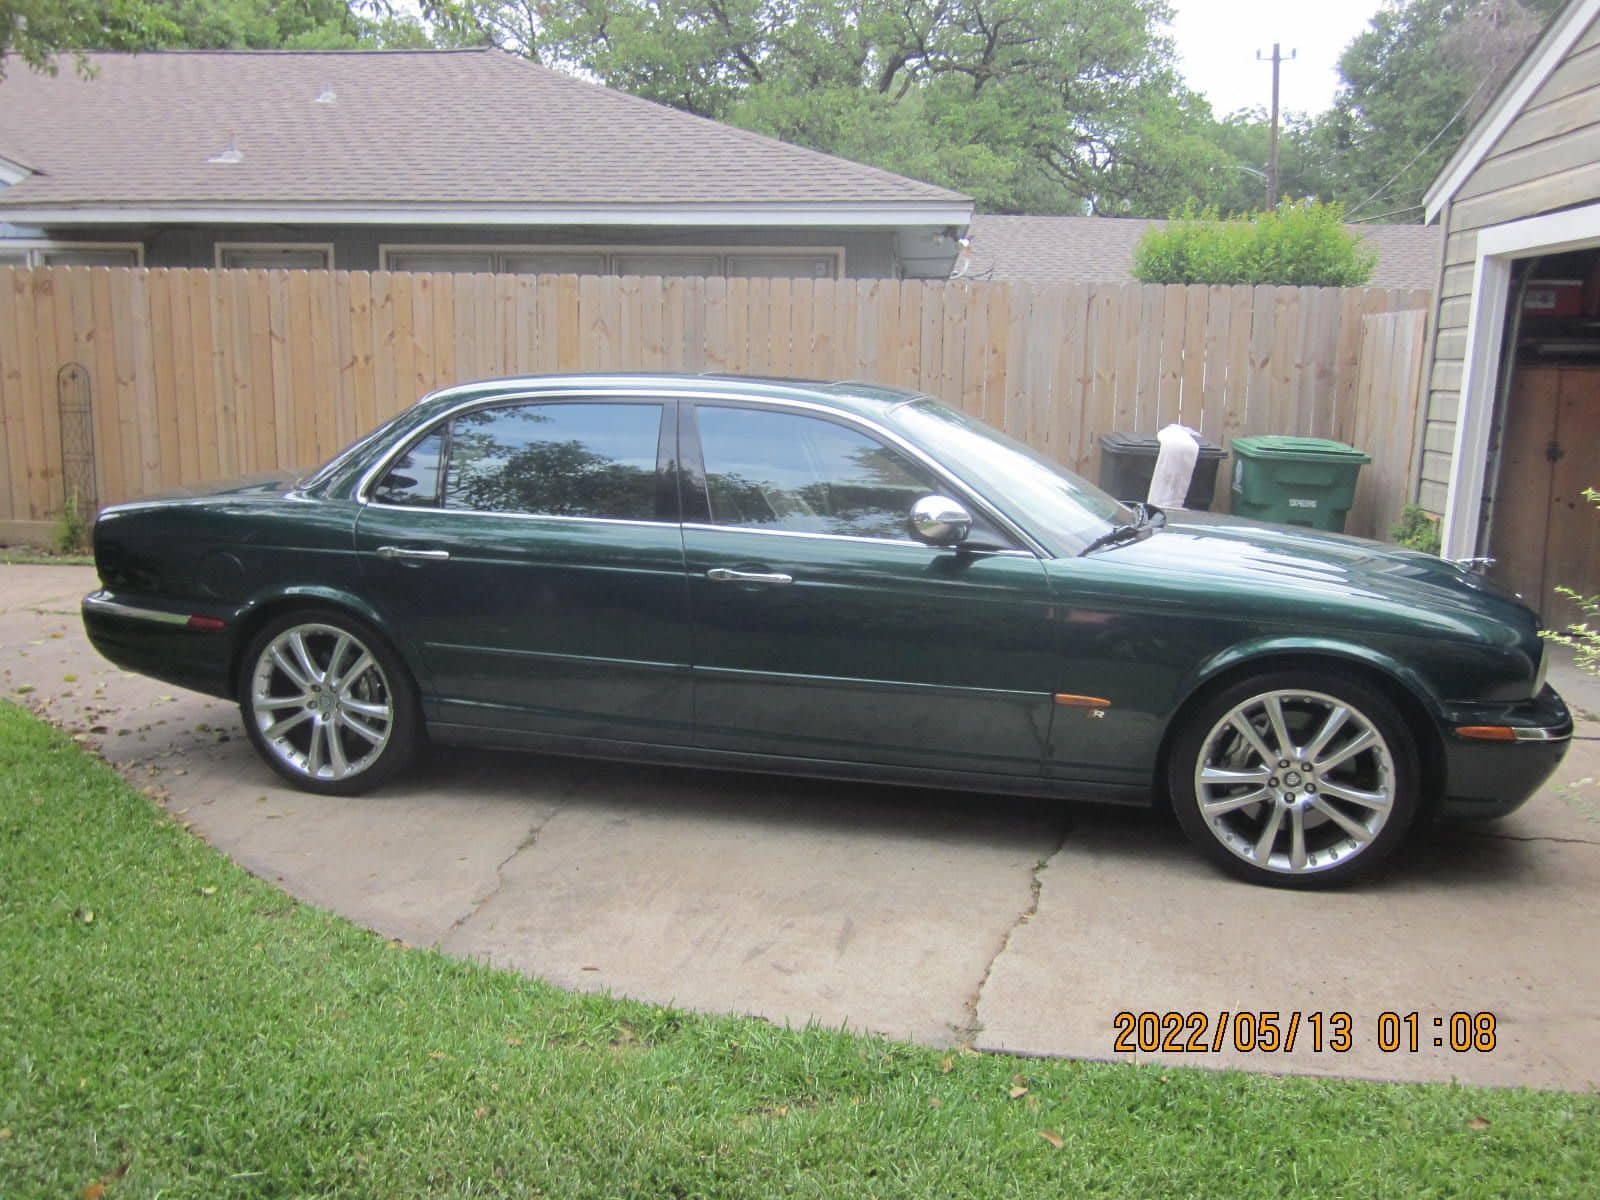 2005 Jaguar Super V8 - 2005 Jaguar Super V8 Racing Green - (Houston) - Used - VIN SAJWA82B55TG41580 - 158,353 Miles - 8 cyl - 2WD - Automatic - Sedan - Other - Houston, TX 77027, United States